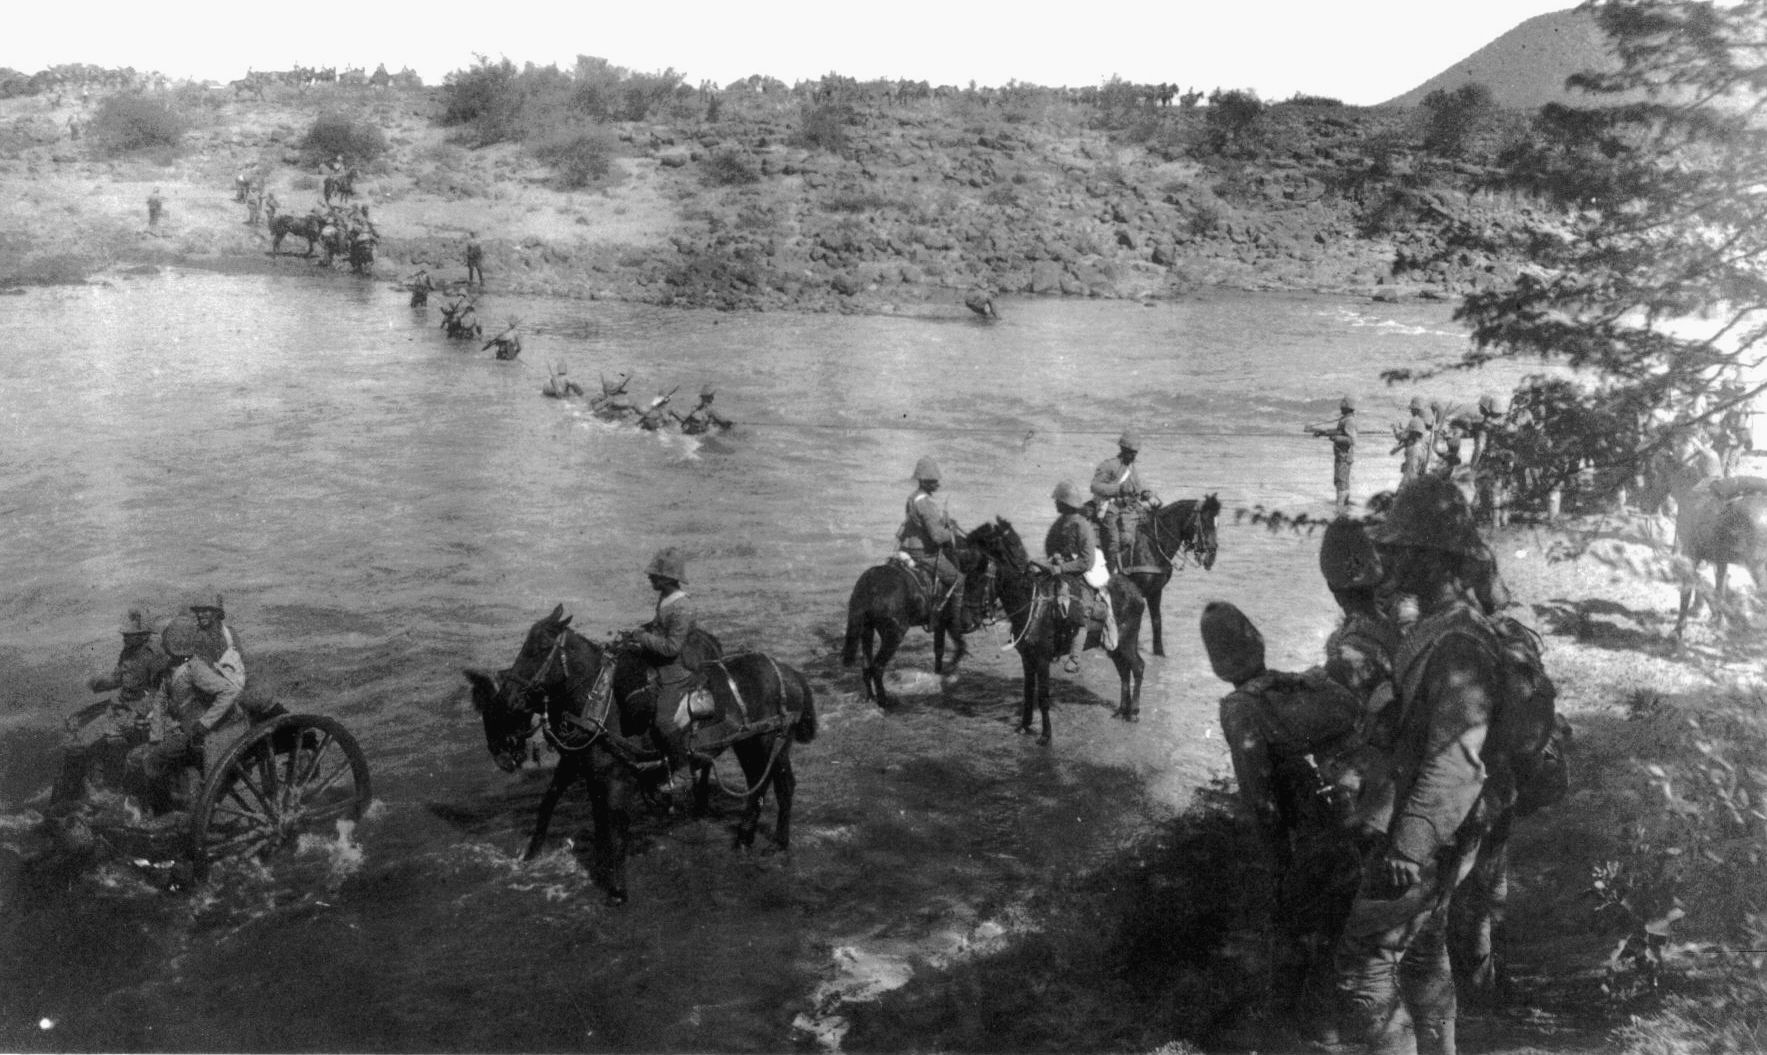 RCR soldiers cross the treacherous, swift-flowing Modder River at Paardeberg Drift, February 18, 1900.